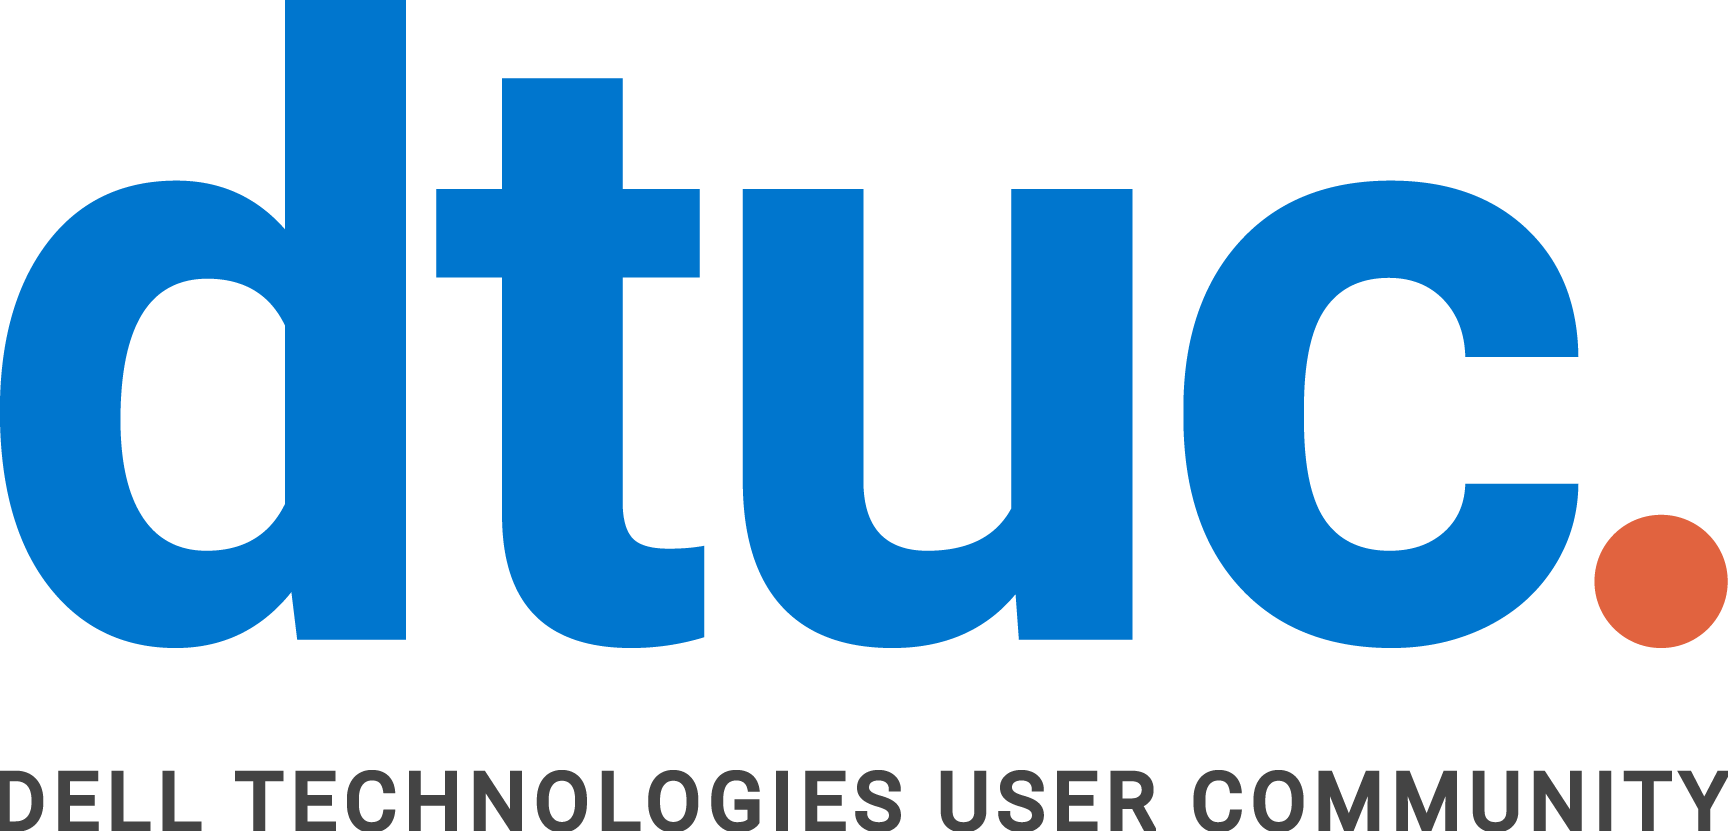 Dell Technologies User Community blue logo